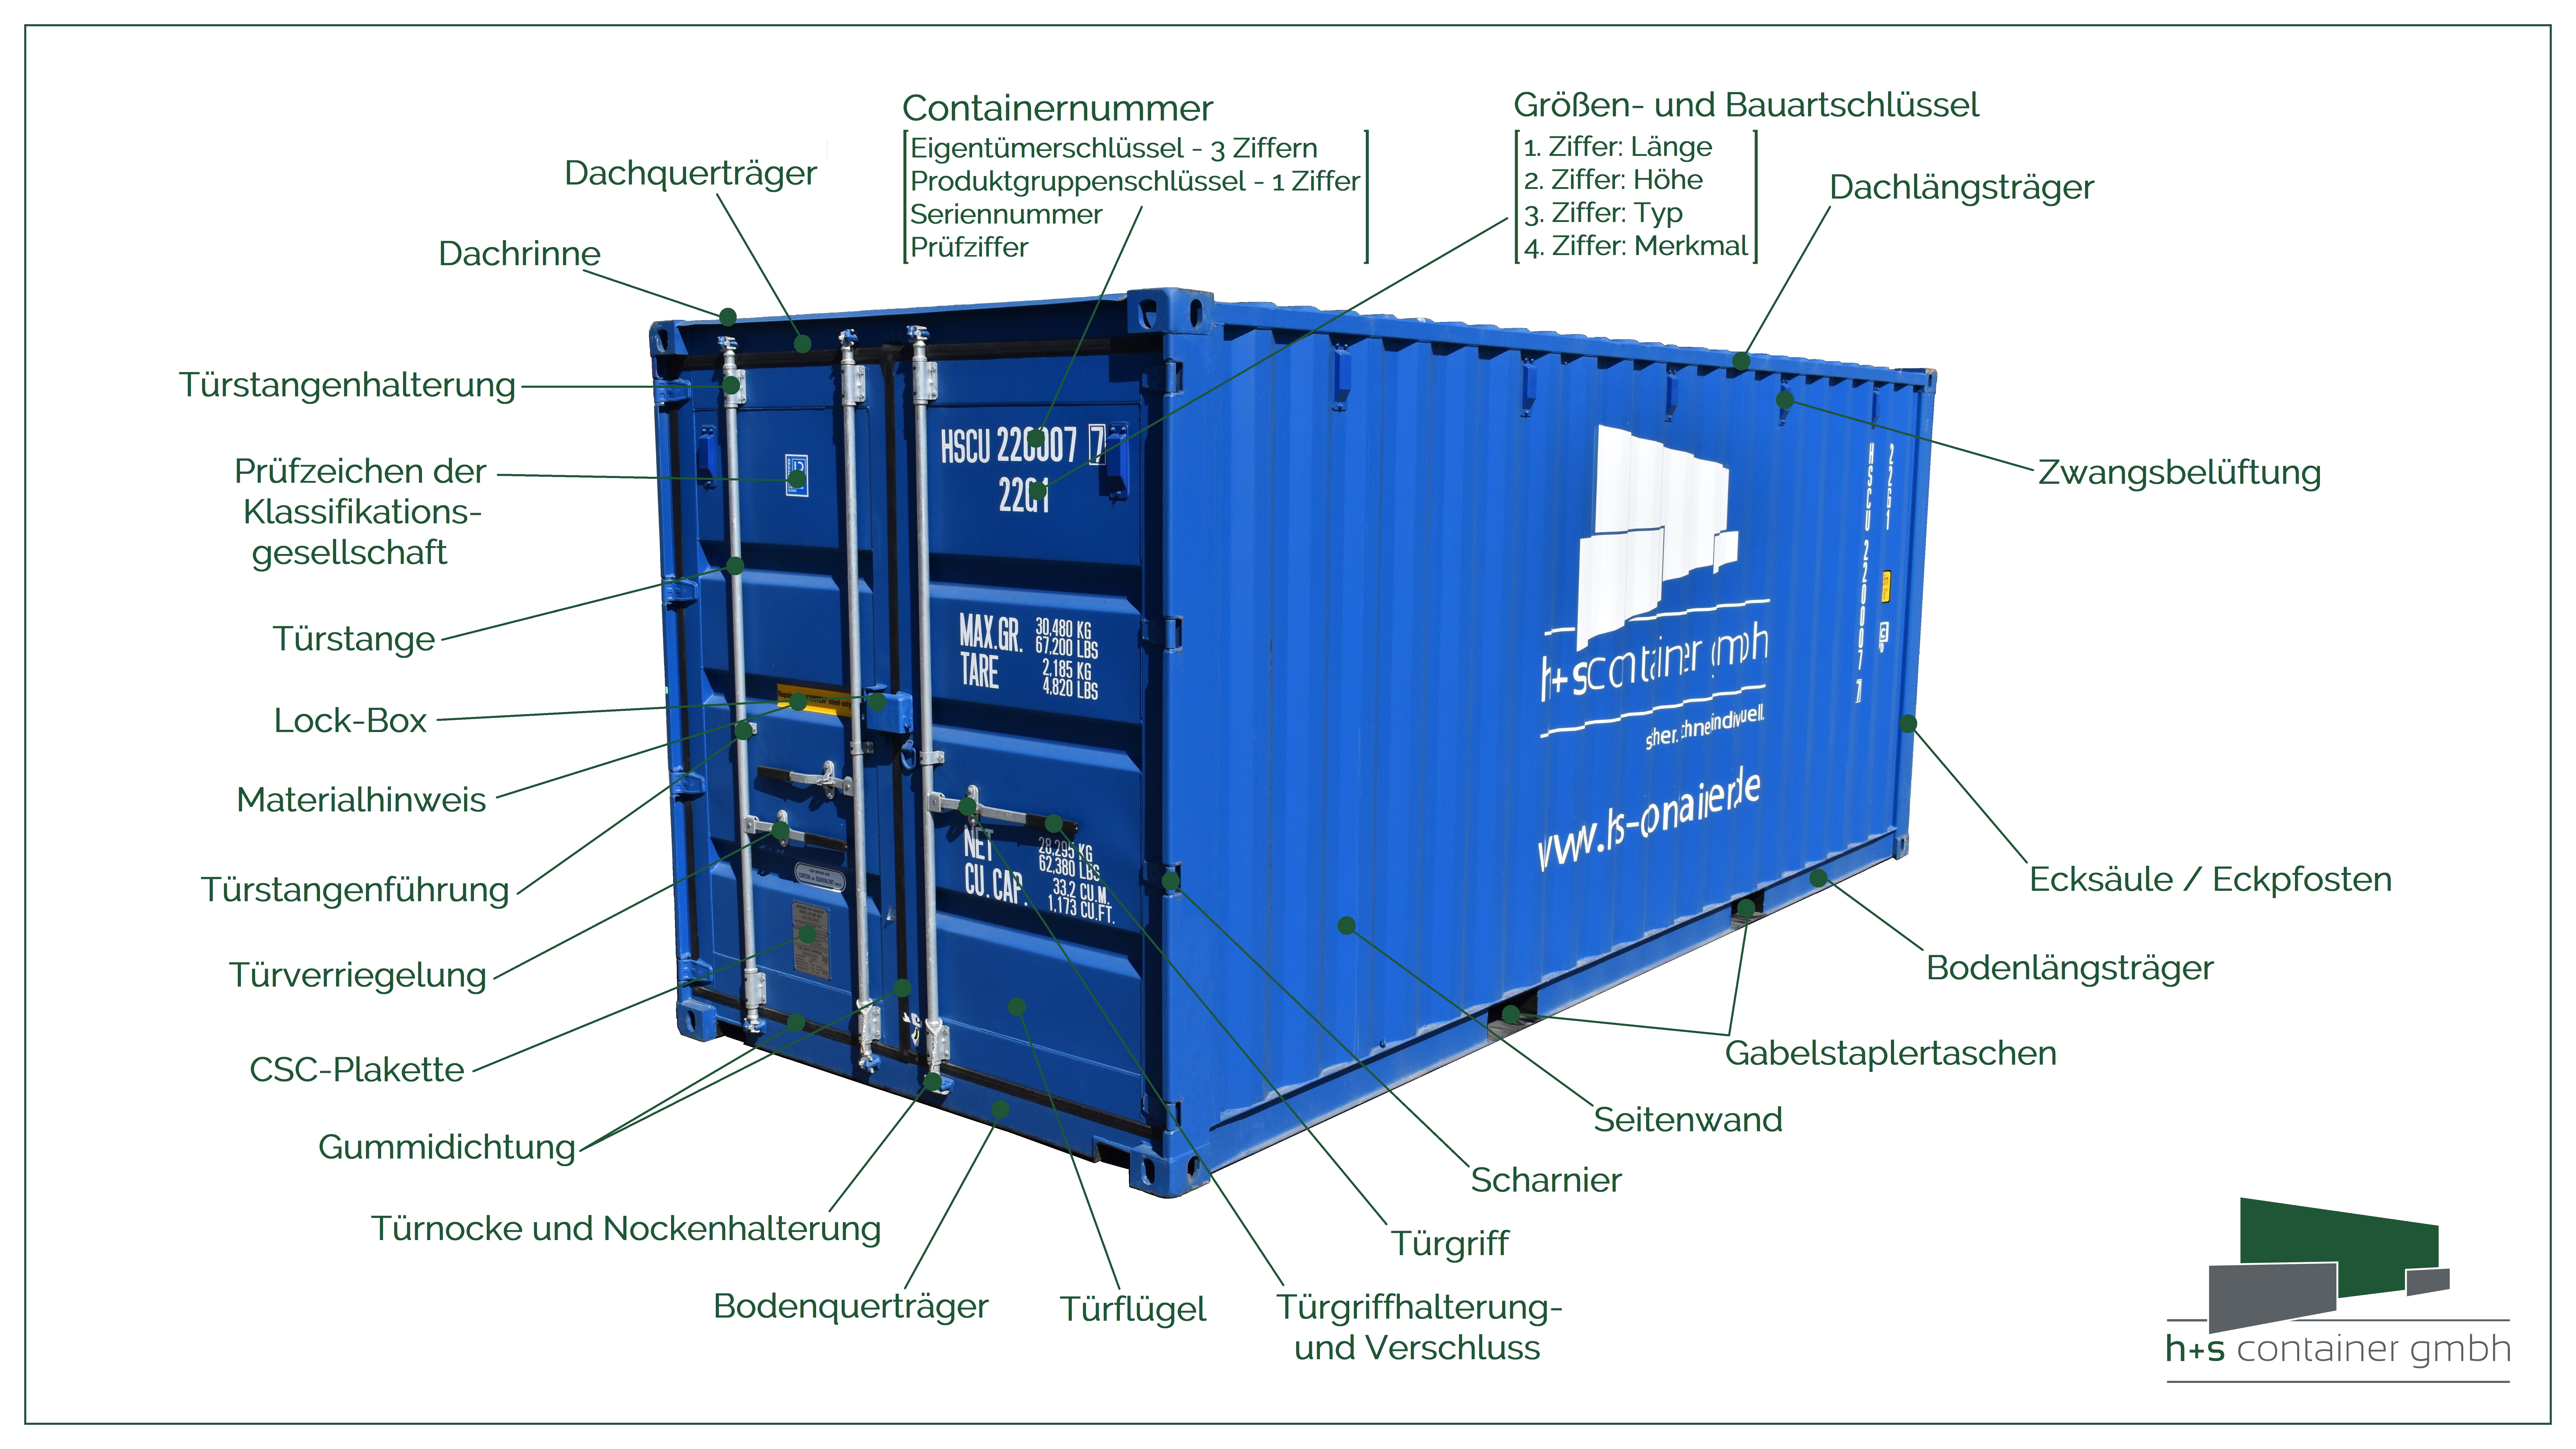 20 seecontainer beschreibung hs container